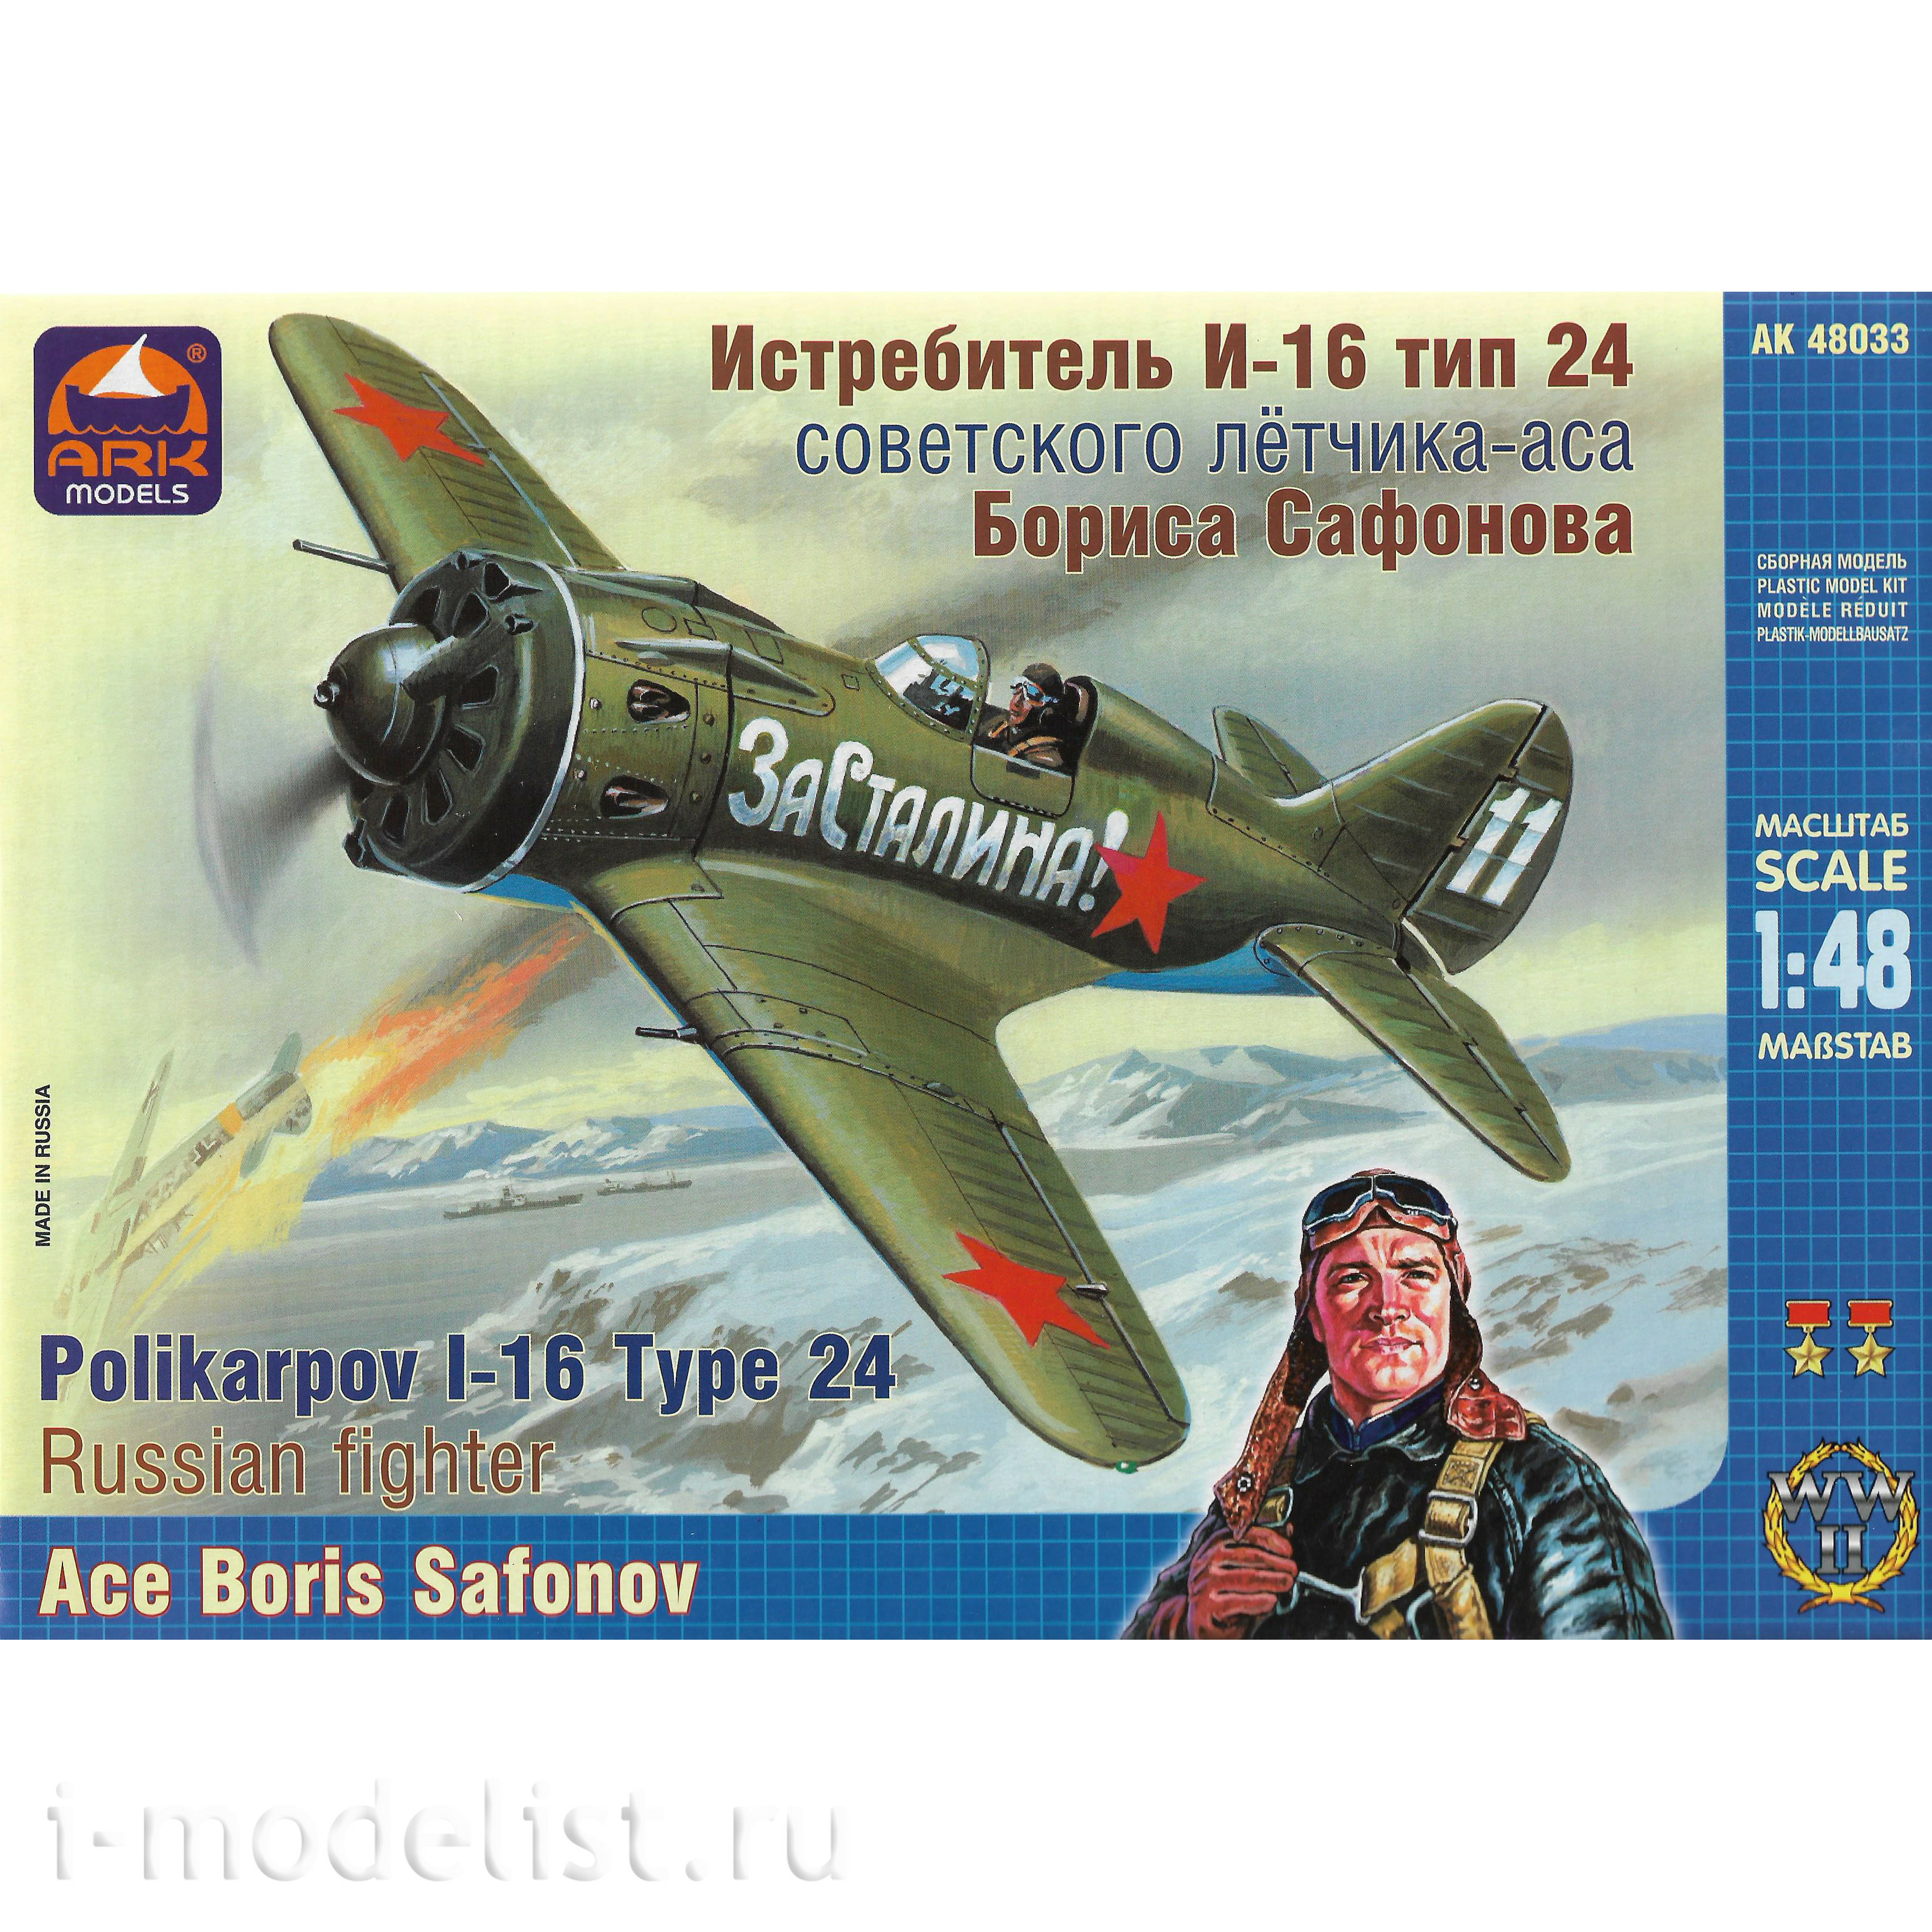 48033 ARK-models 1/48 Fighter I-16 type 24 Soviet ACE pilot Boris Safonov